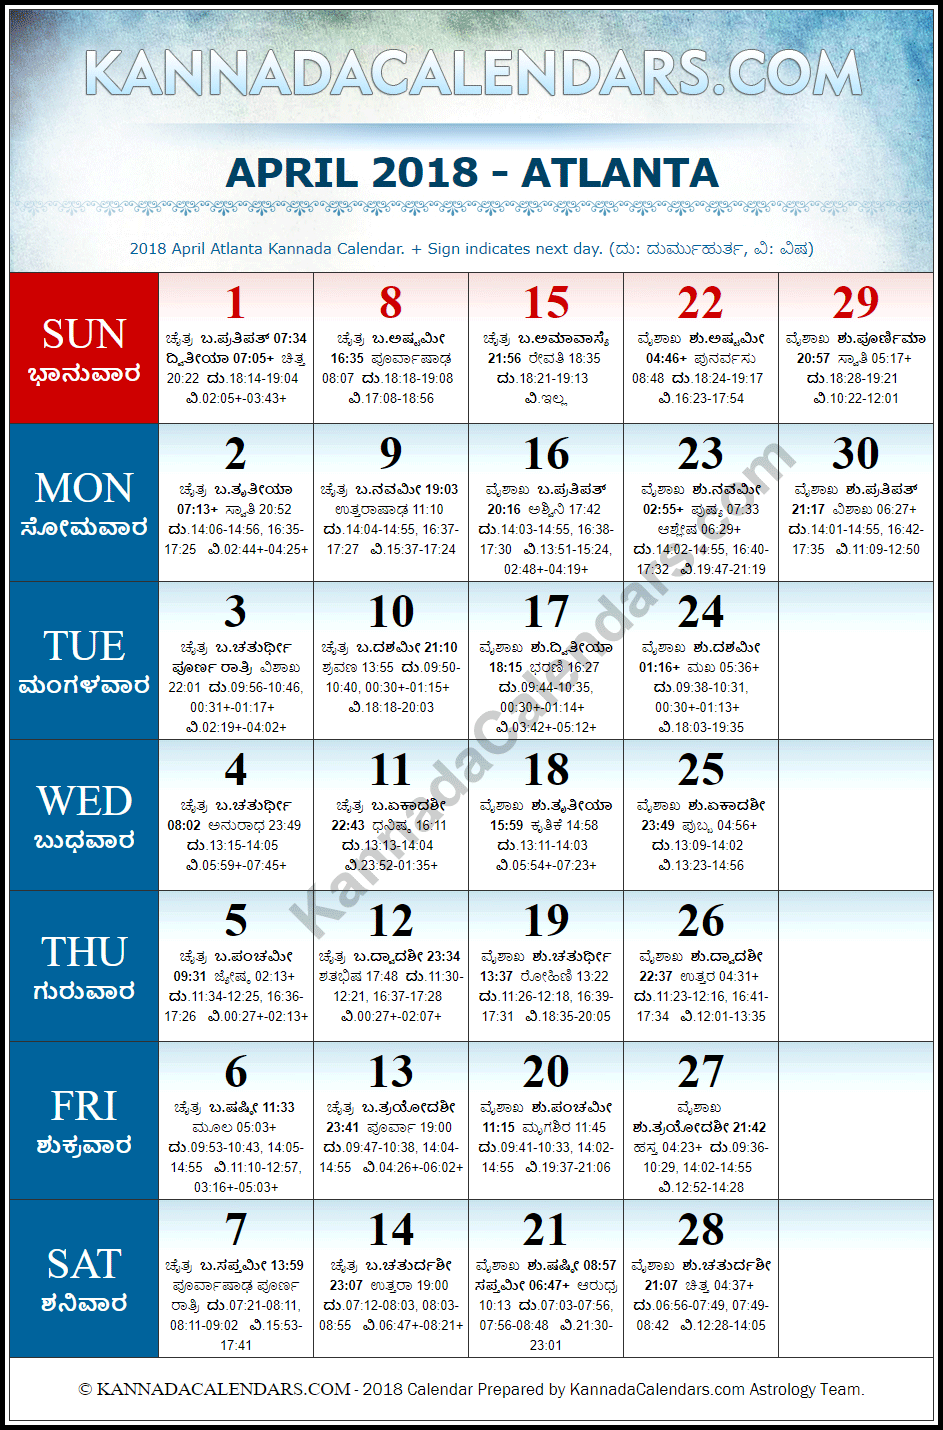 April 2018 Kannada Calendar for Atlanta, USA